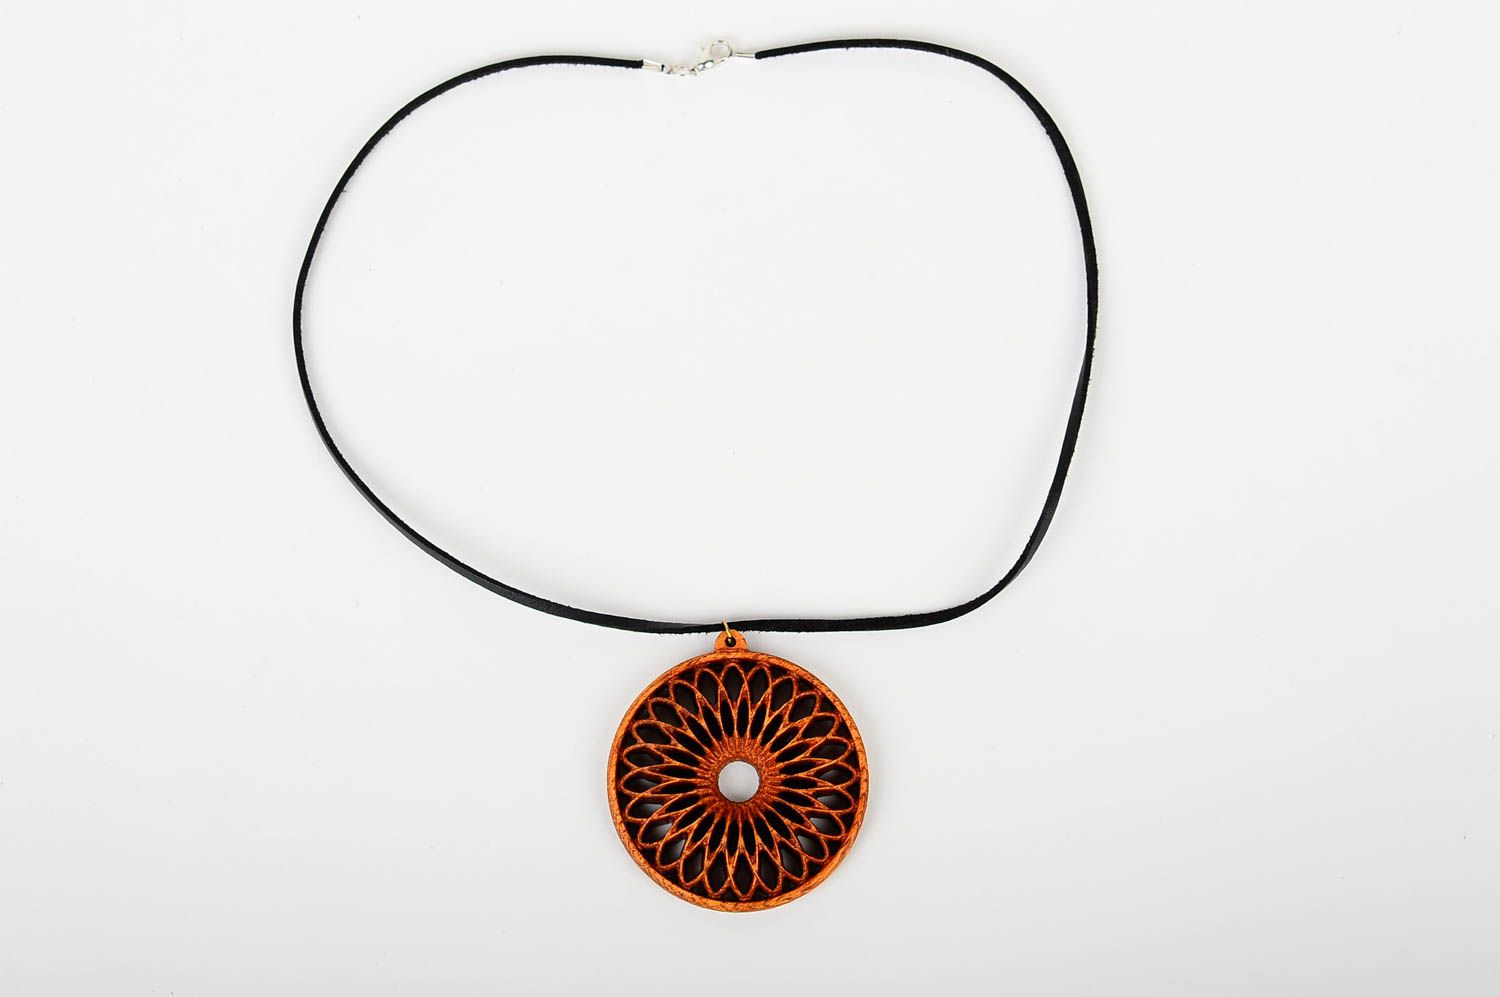 Handmade pendant unusual accessory wooden jewelry gift ideas pendant for men photo 2